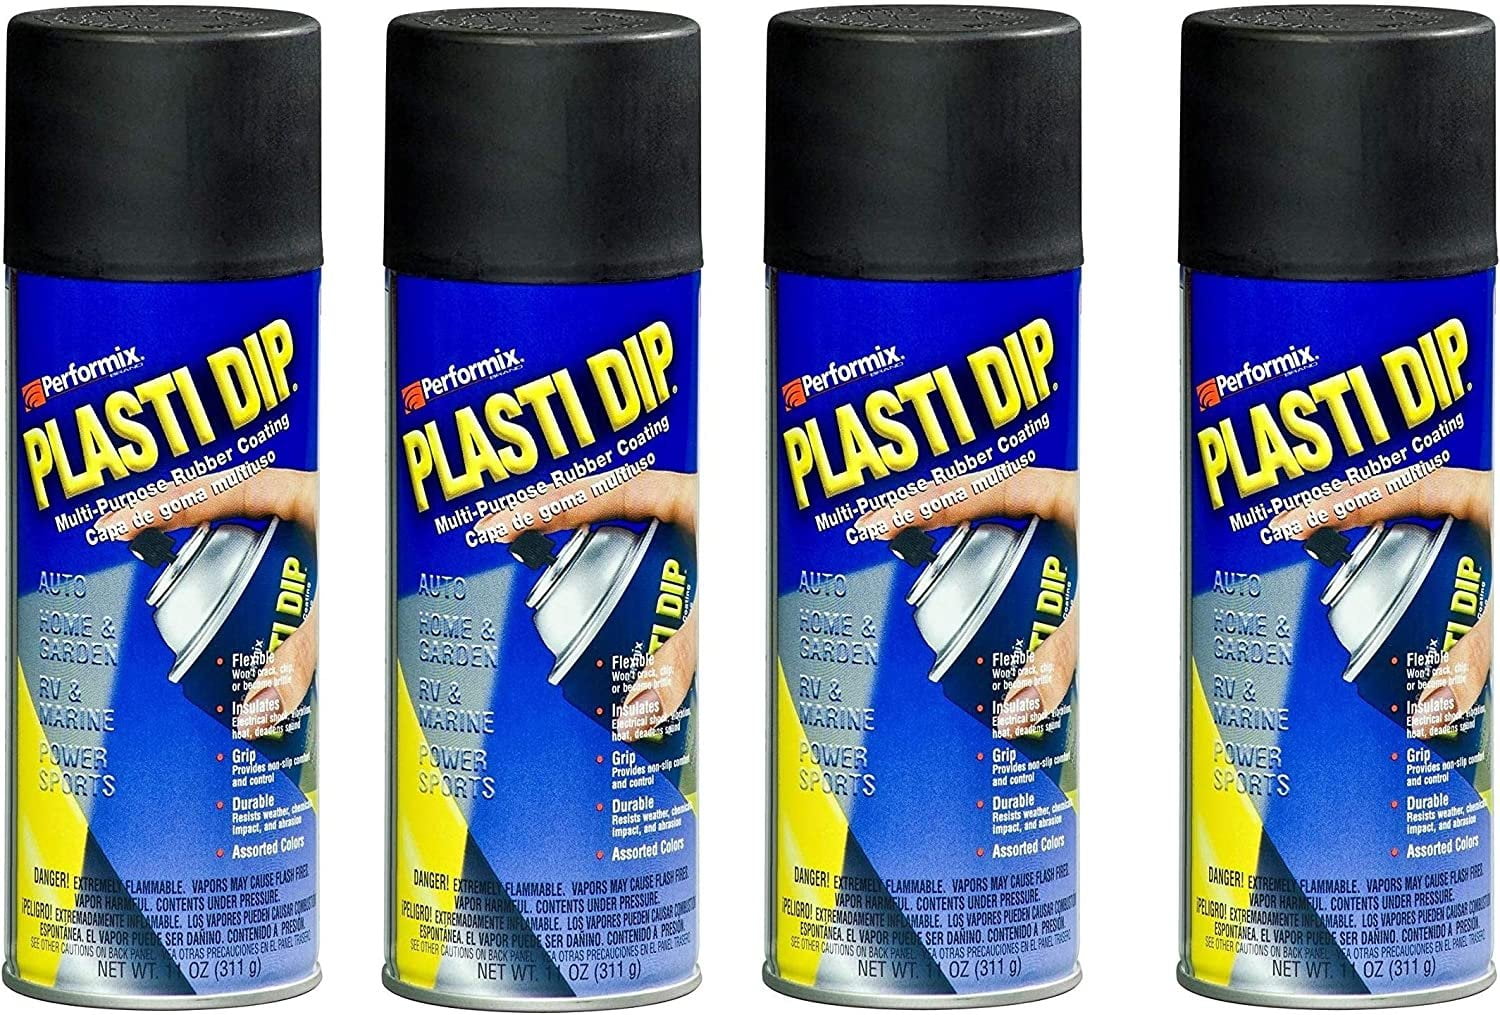 Plasti Dip 11-fl oz White Aerosol Spray Waterproof Rubberized Coating